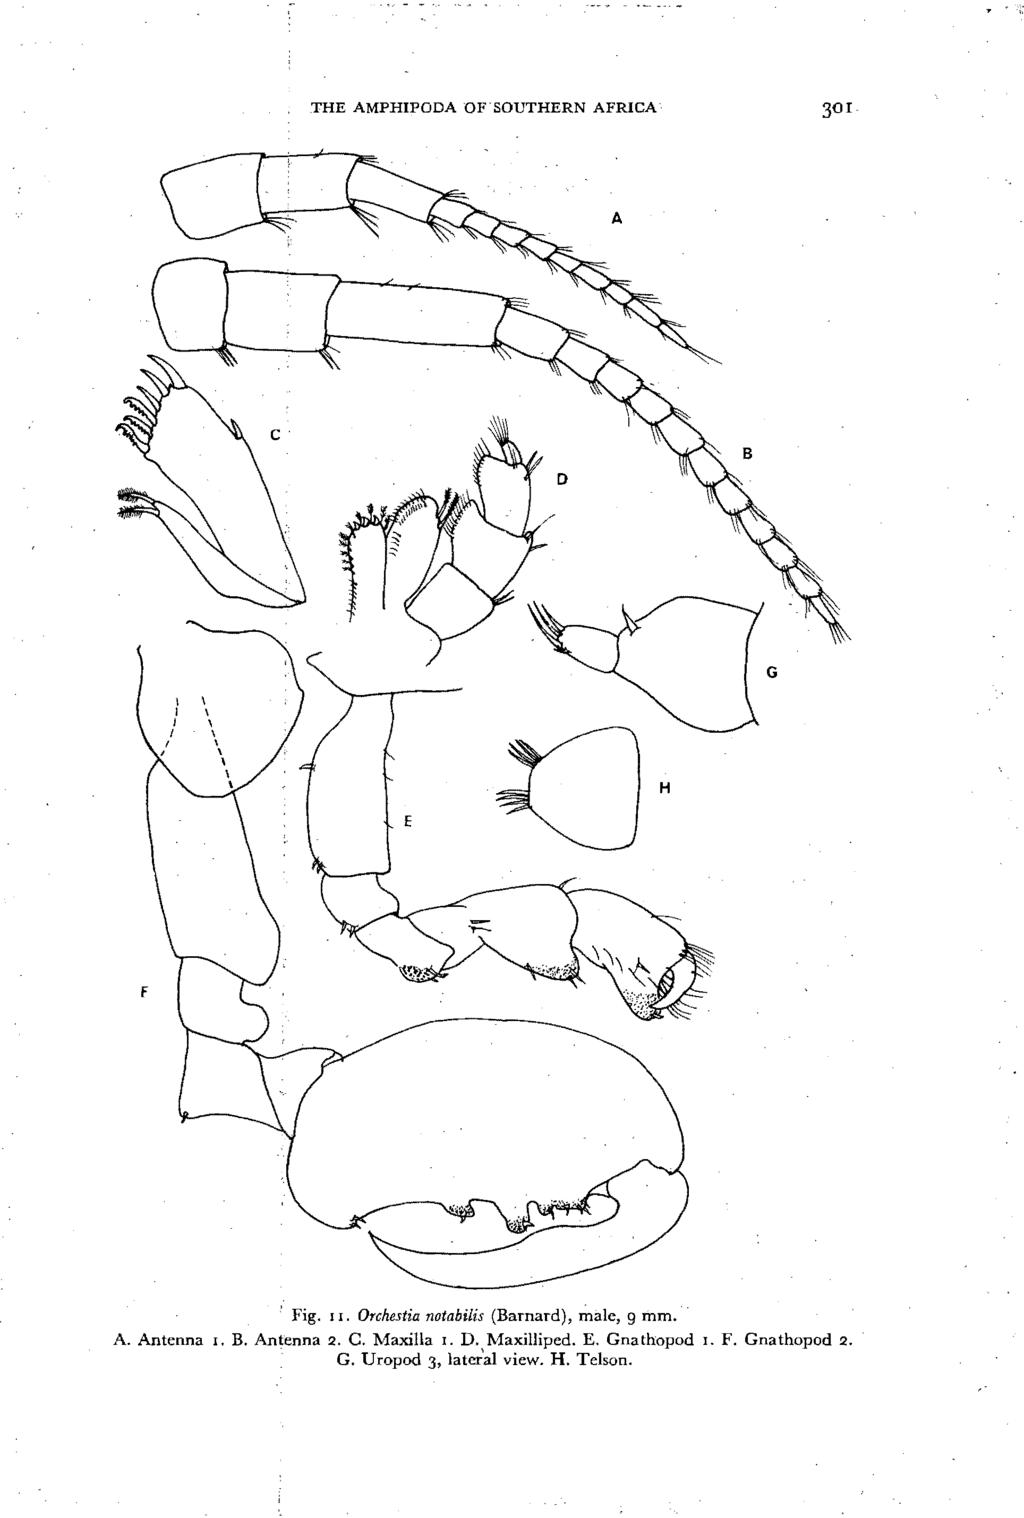 THE AMPHIPODA OF "SOUTHERN AFRICA 3 01 G, Fig. II. Orchestia notabilis (Barnard), JiJale, 9 mm. A. Antenna I. B.